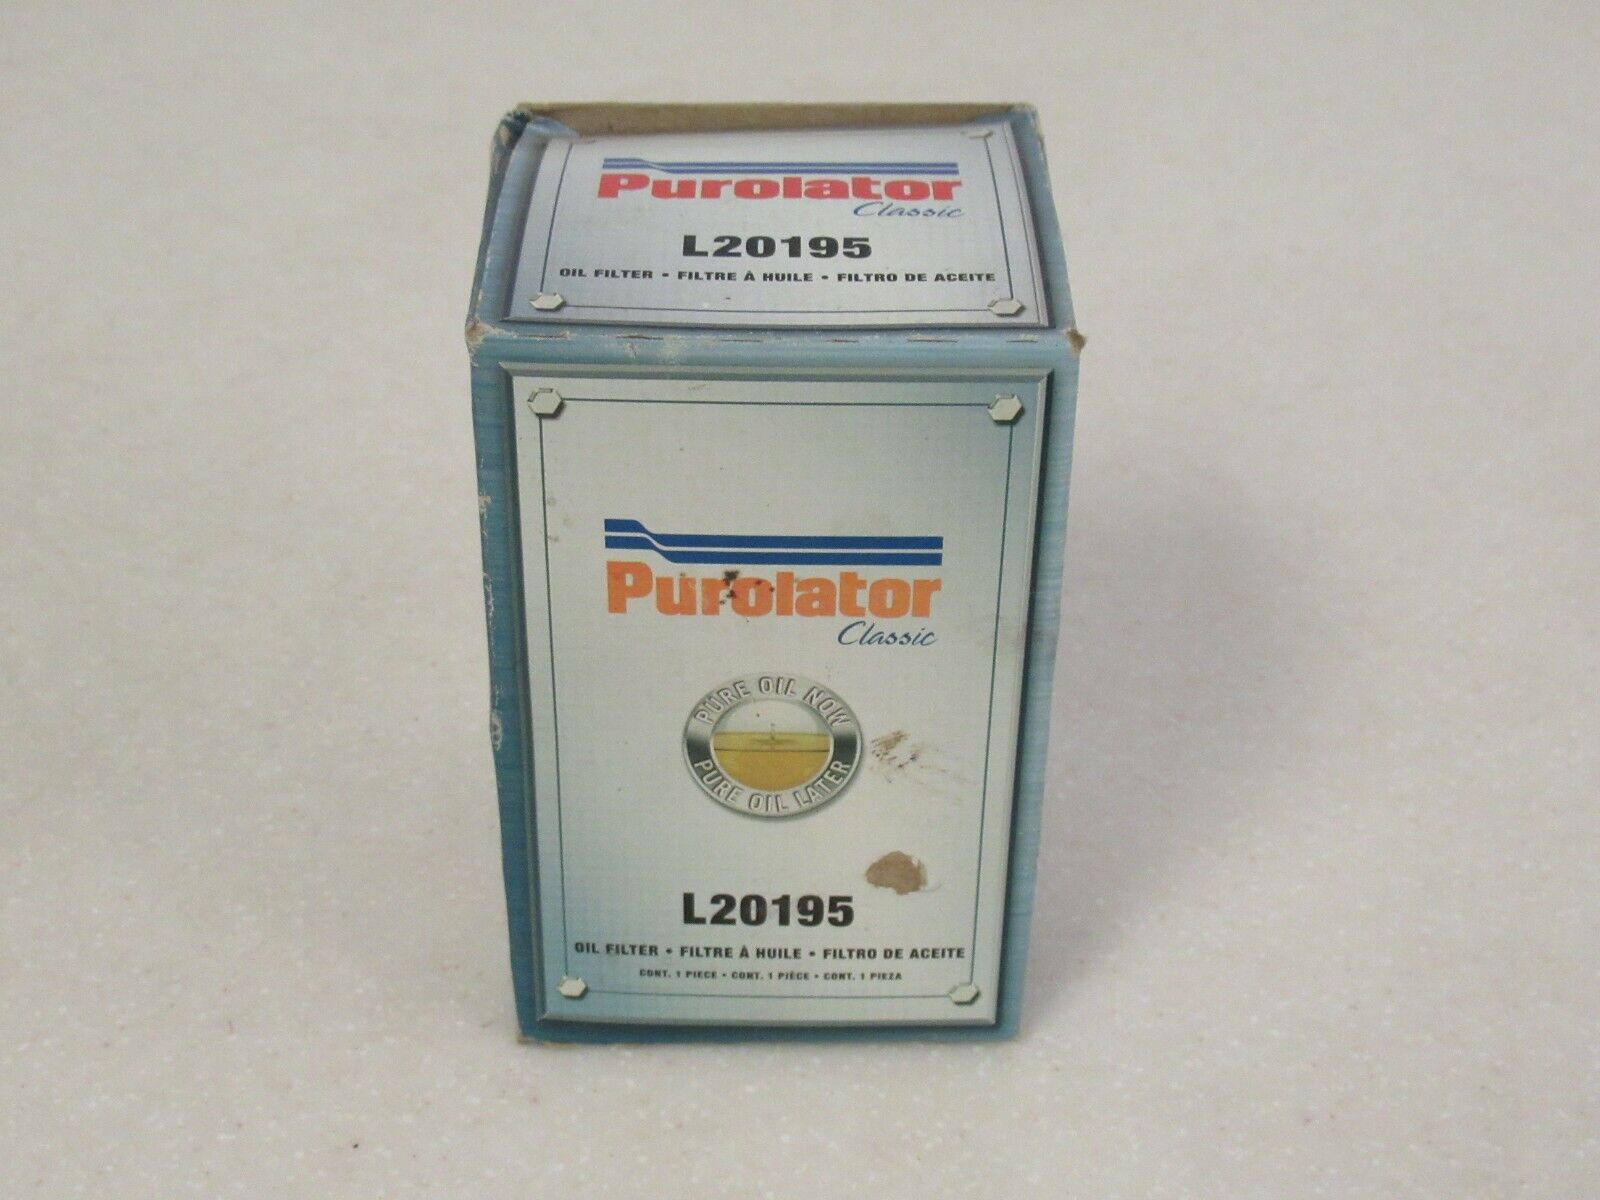 Purolator Classic Oil Filter L20195